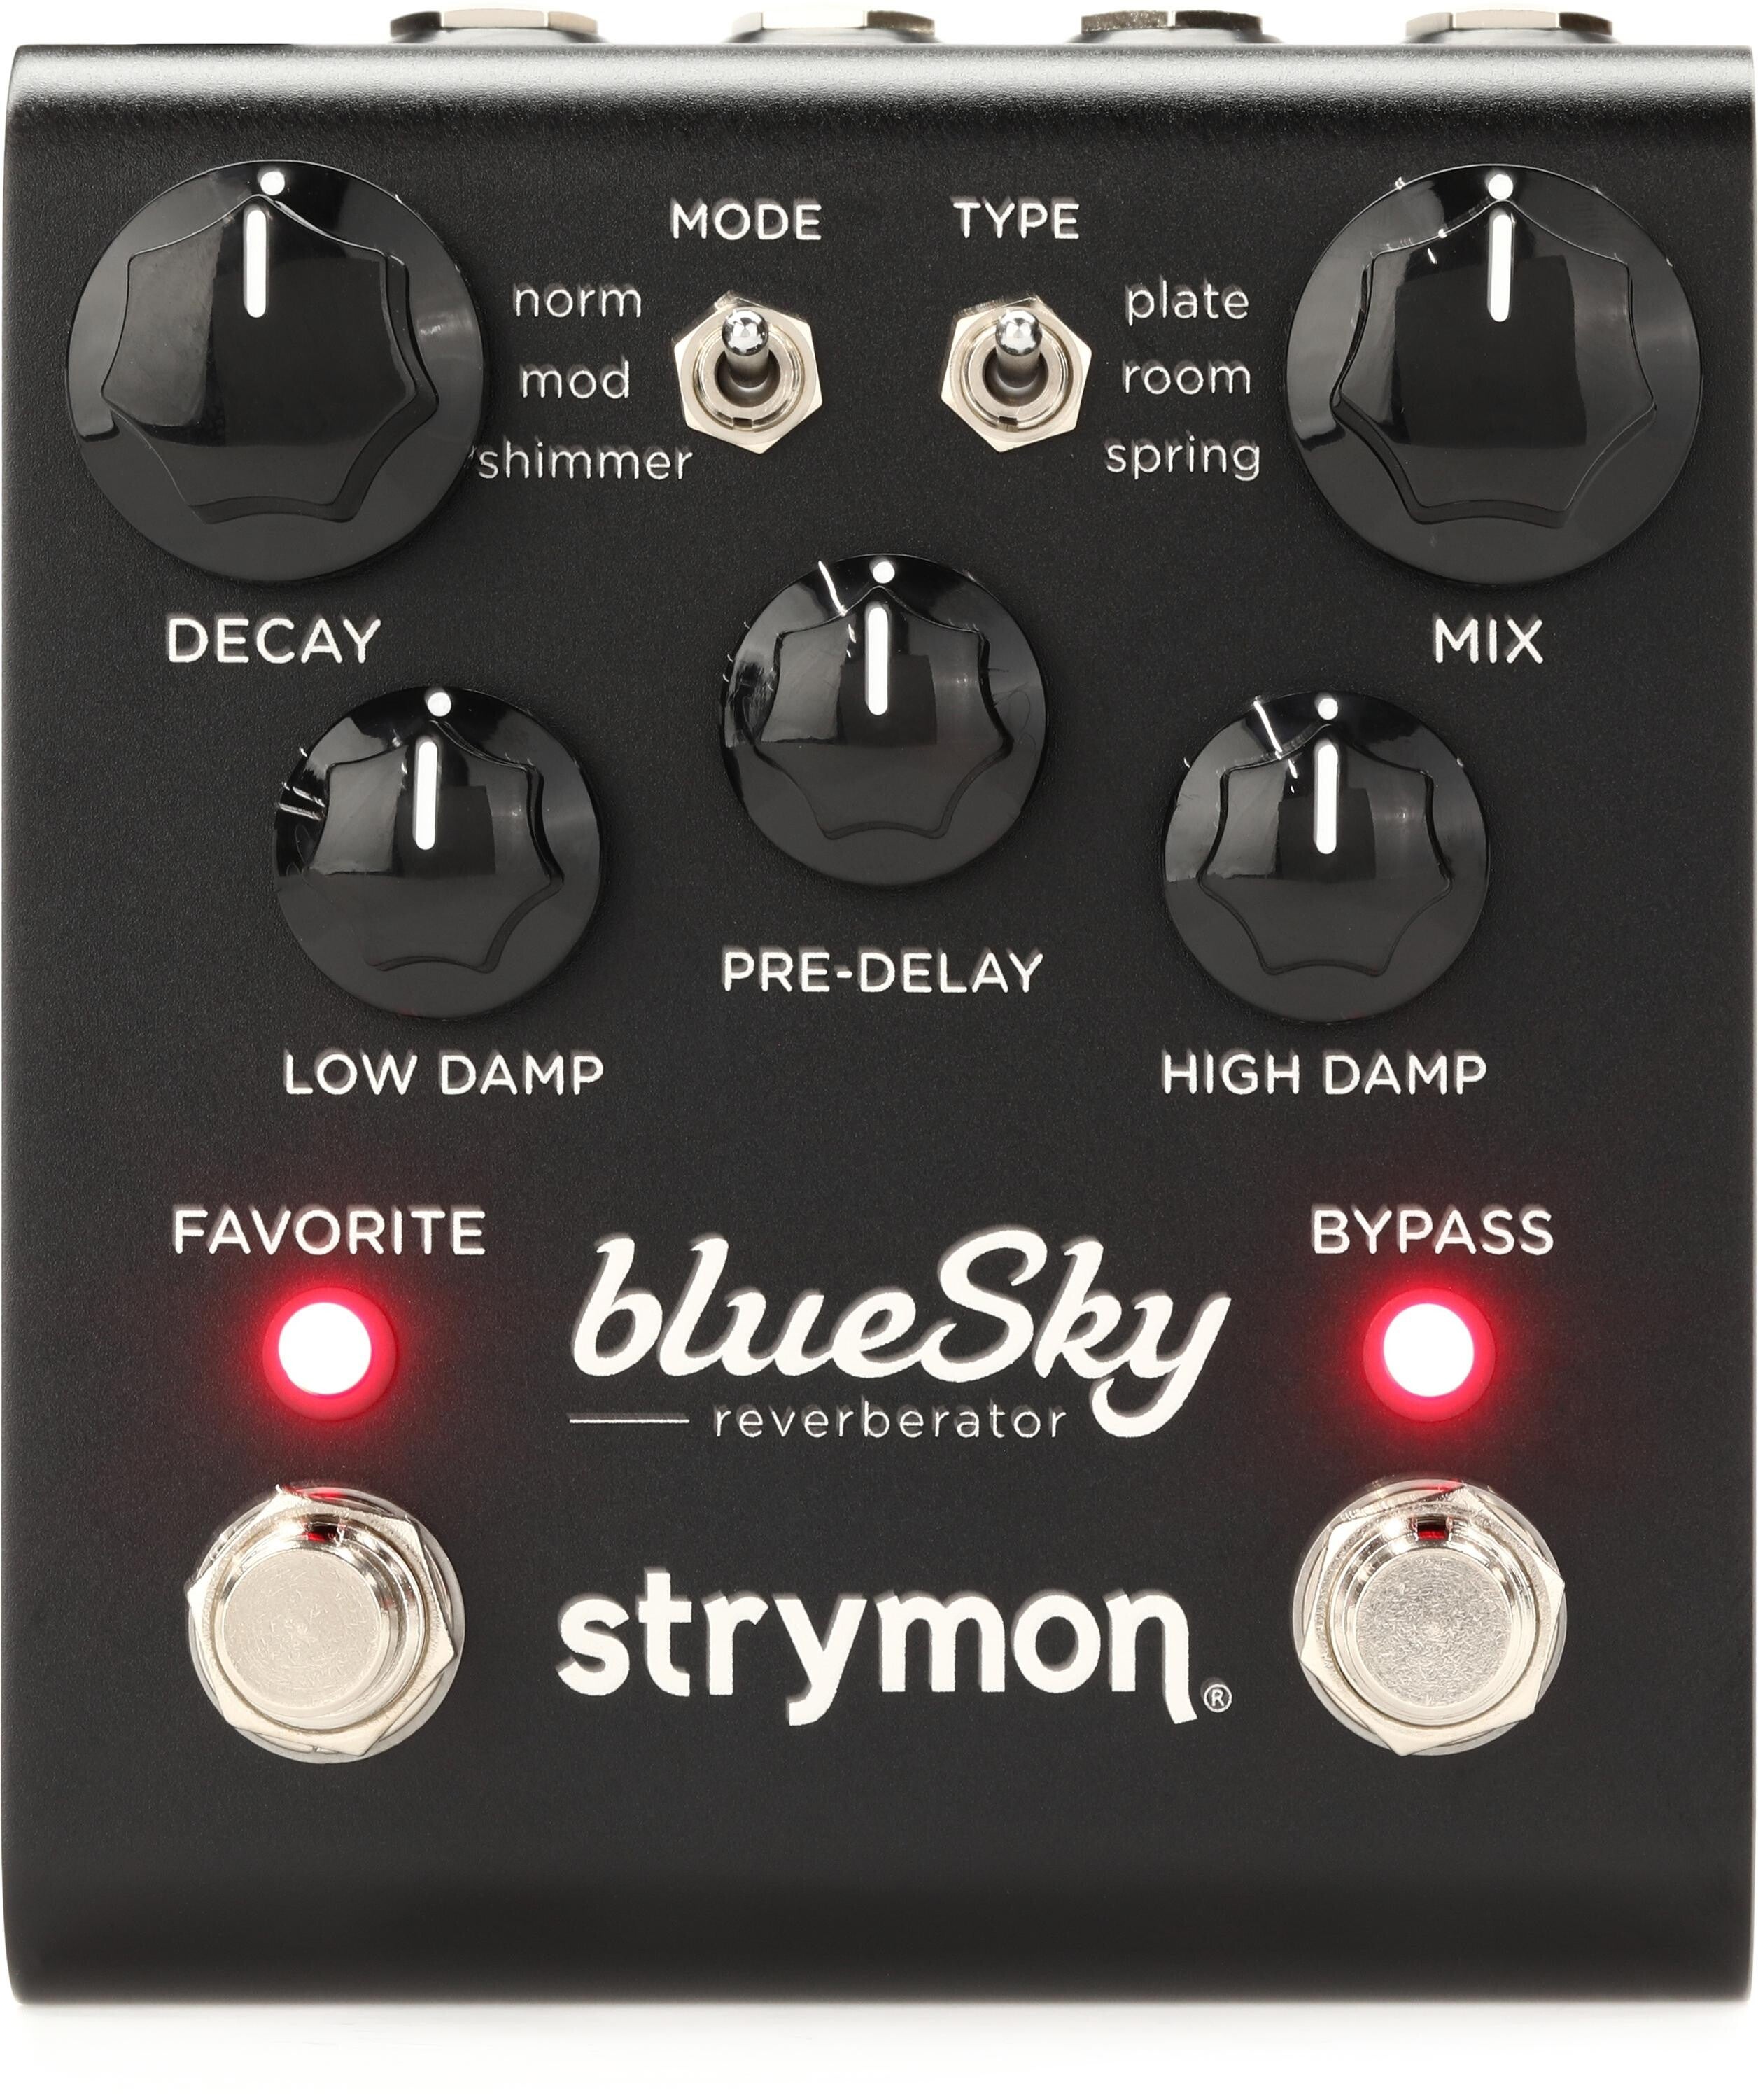 Strymon blueSky Reverberator Pedal - Midnight Edition | Sweetwater